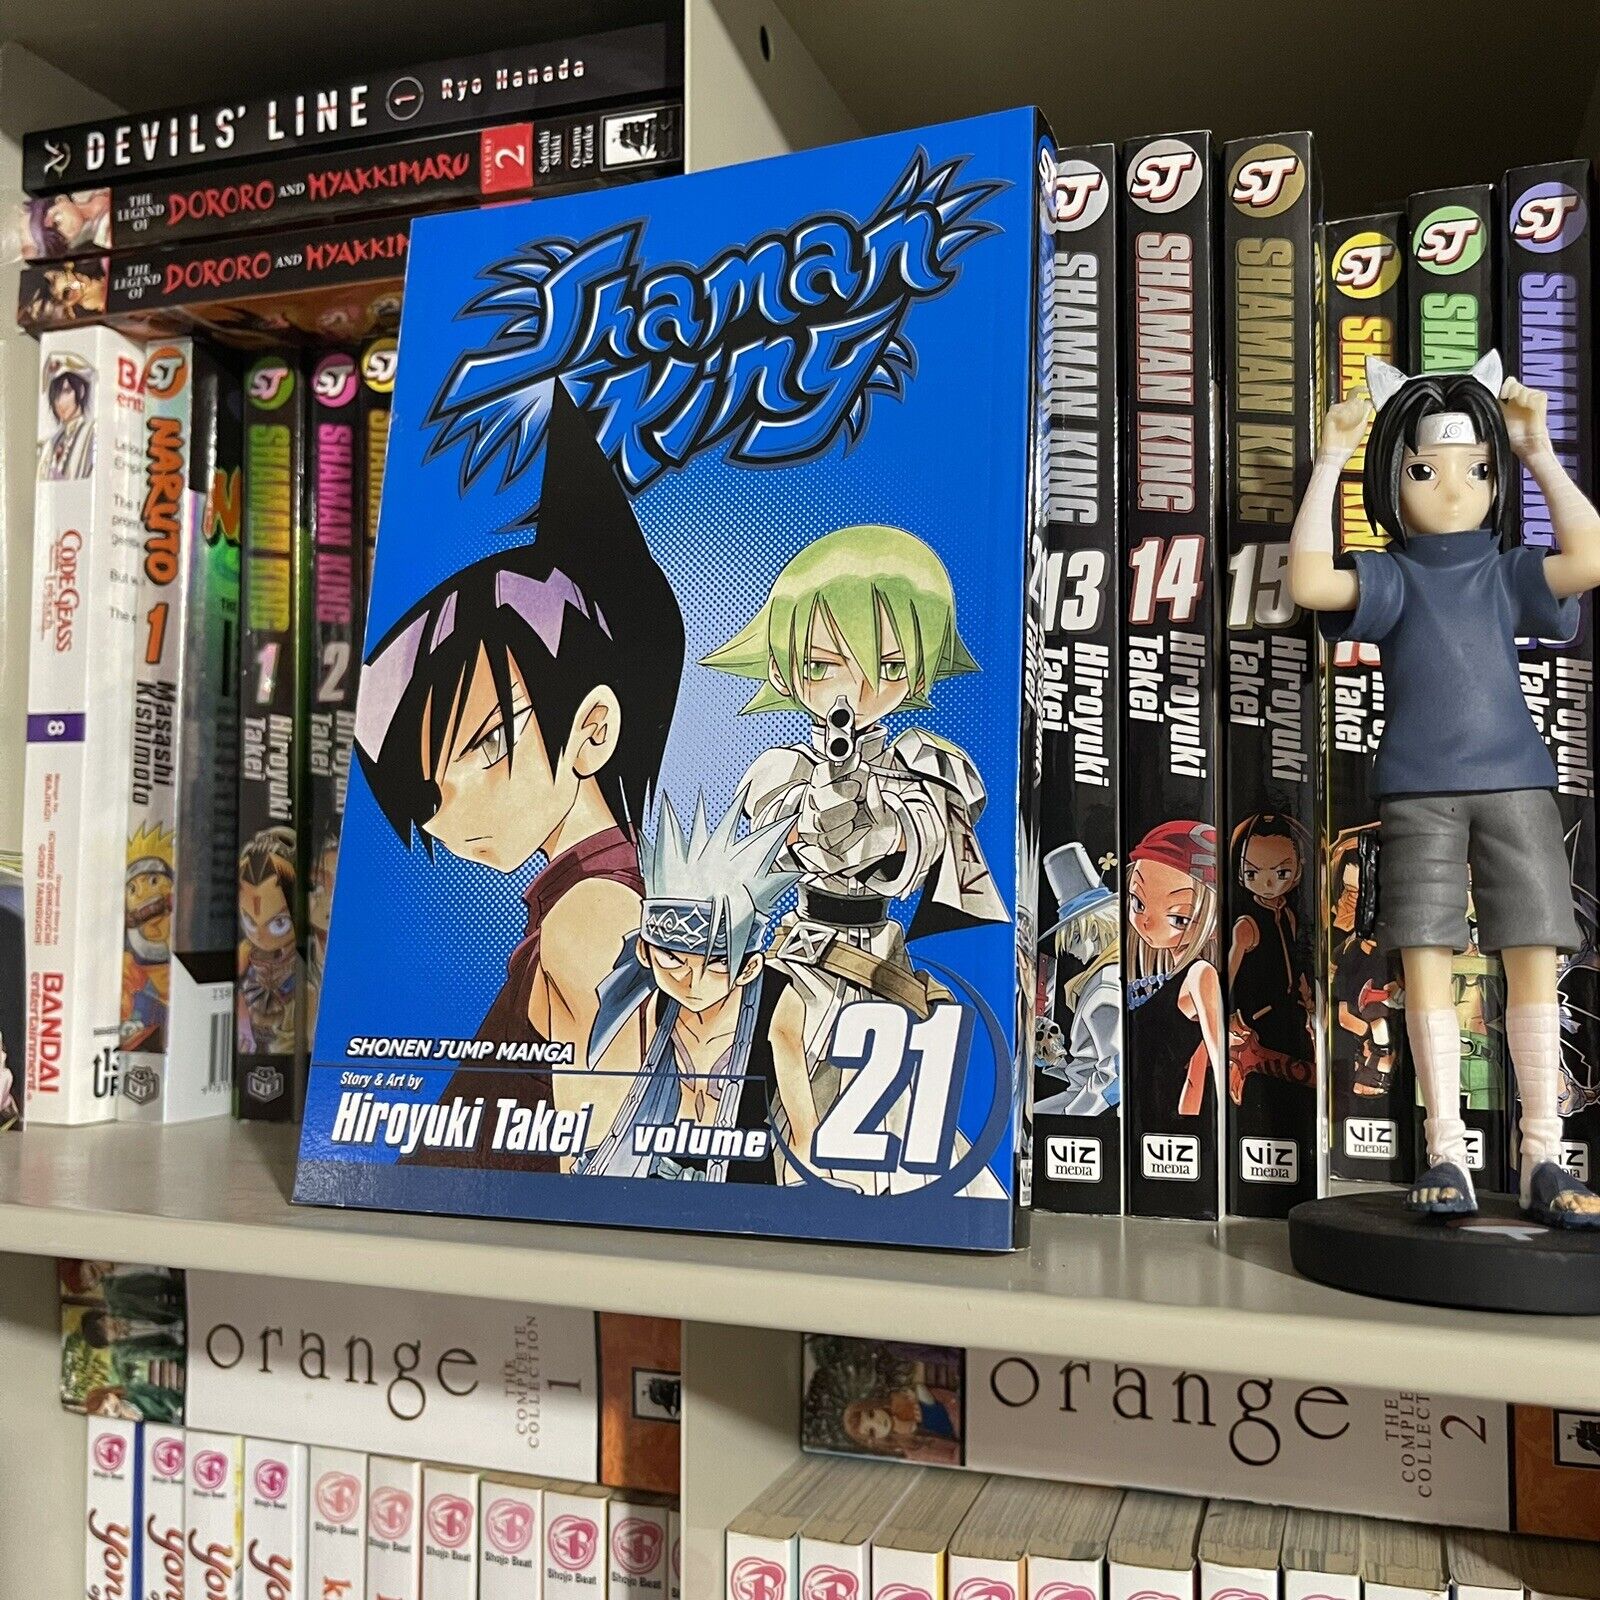 Shaman King manga Vol 21 First Print Takei Shounen anime graphic novel book